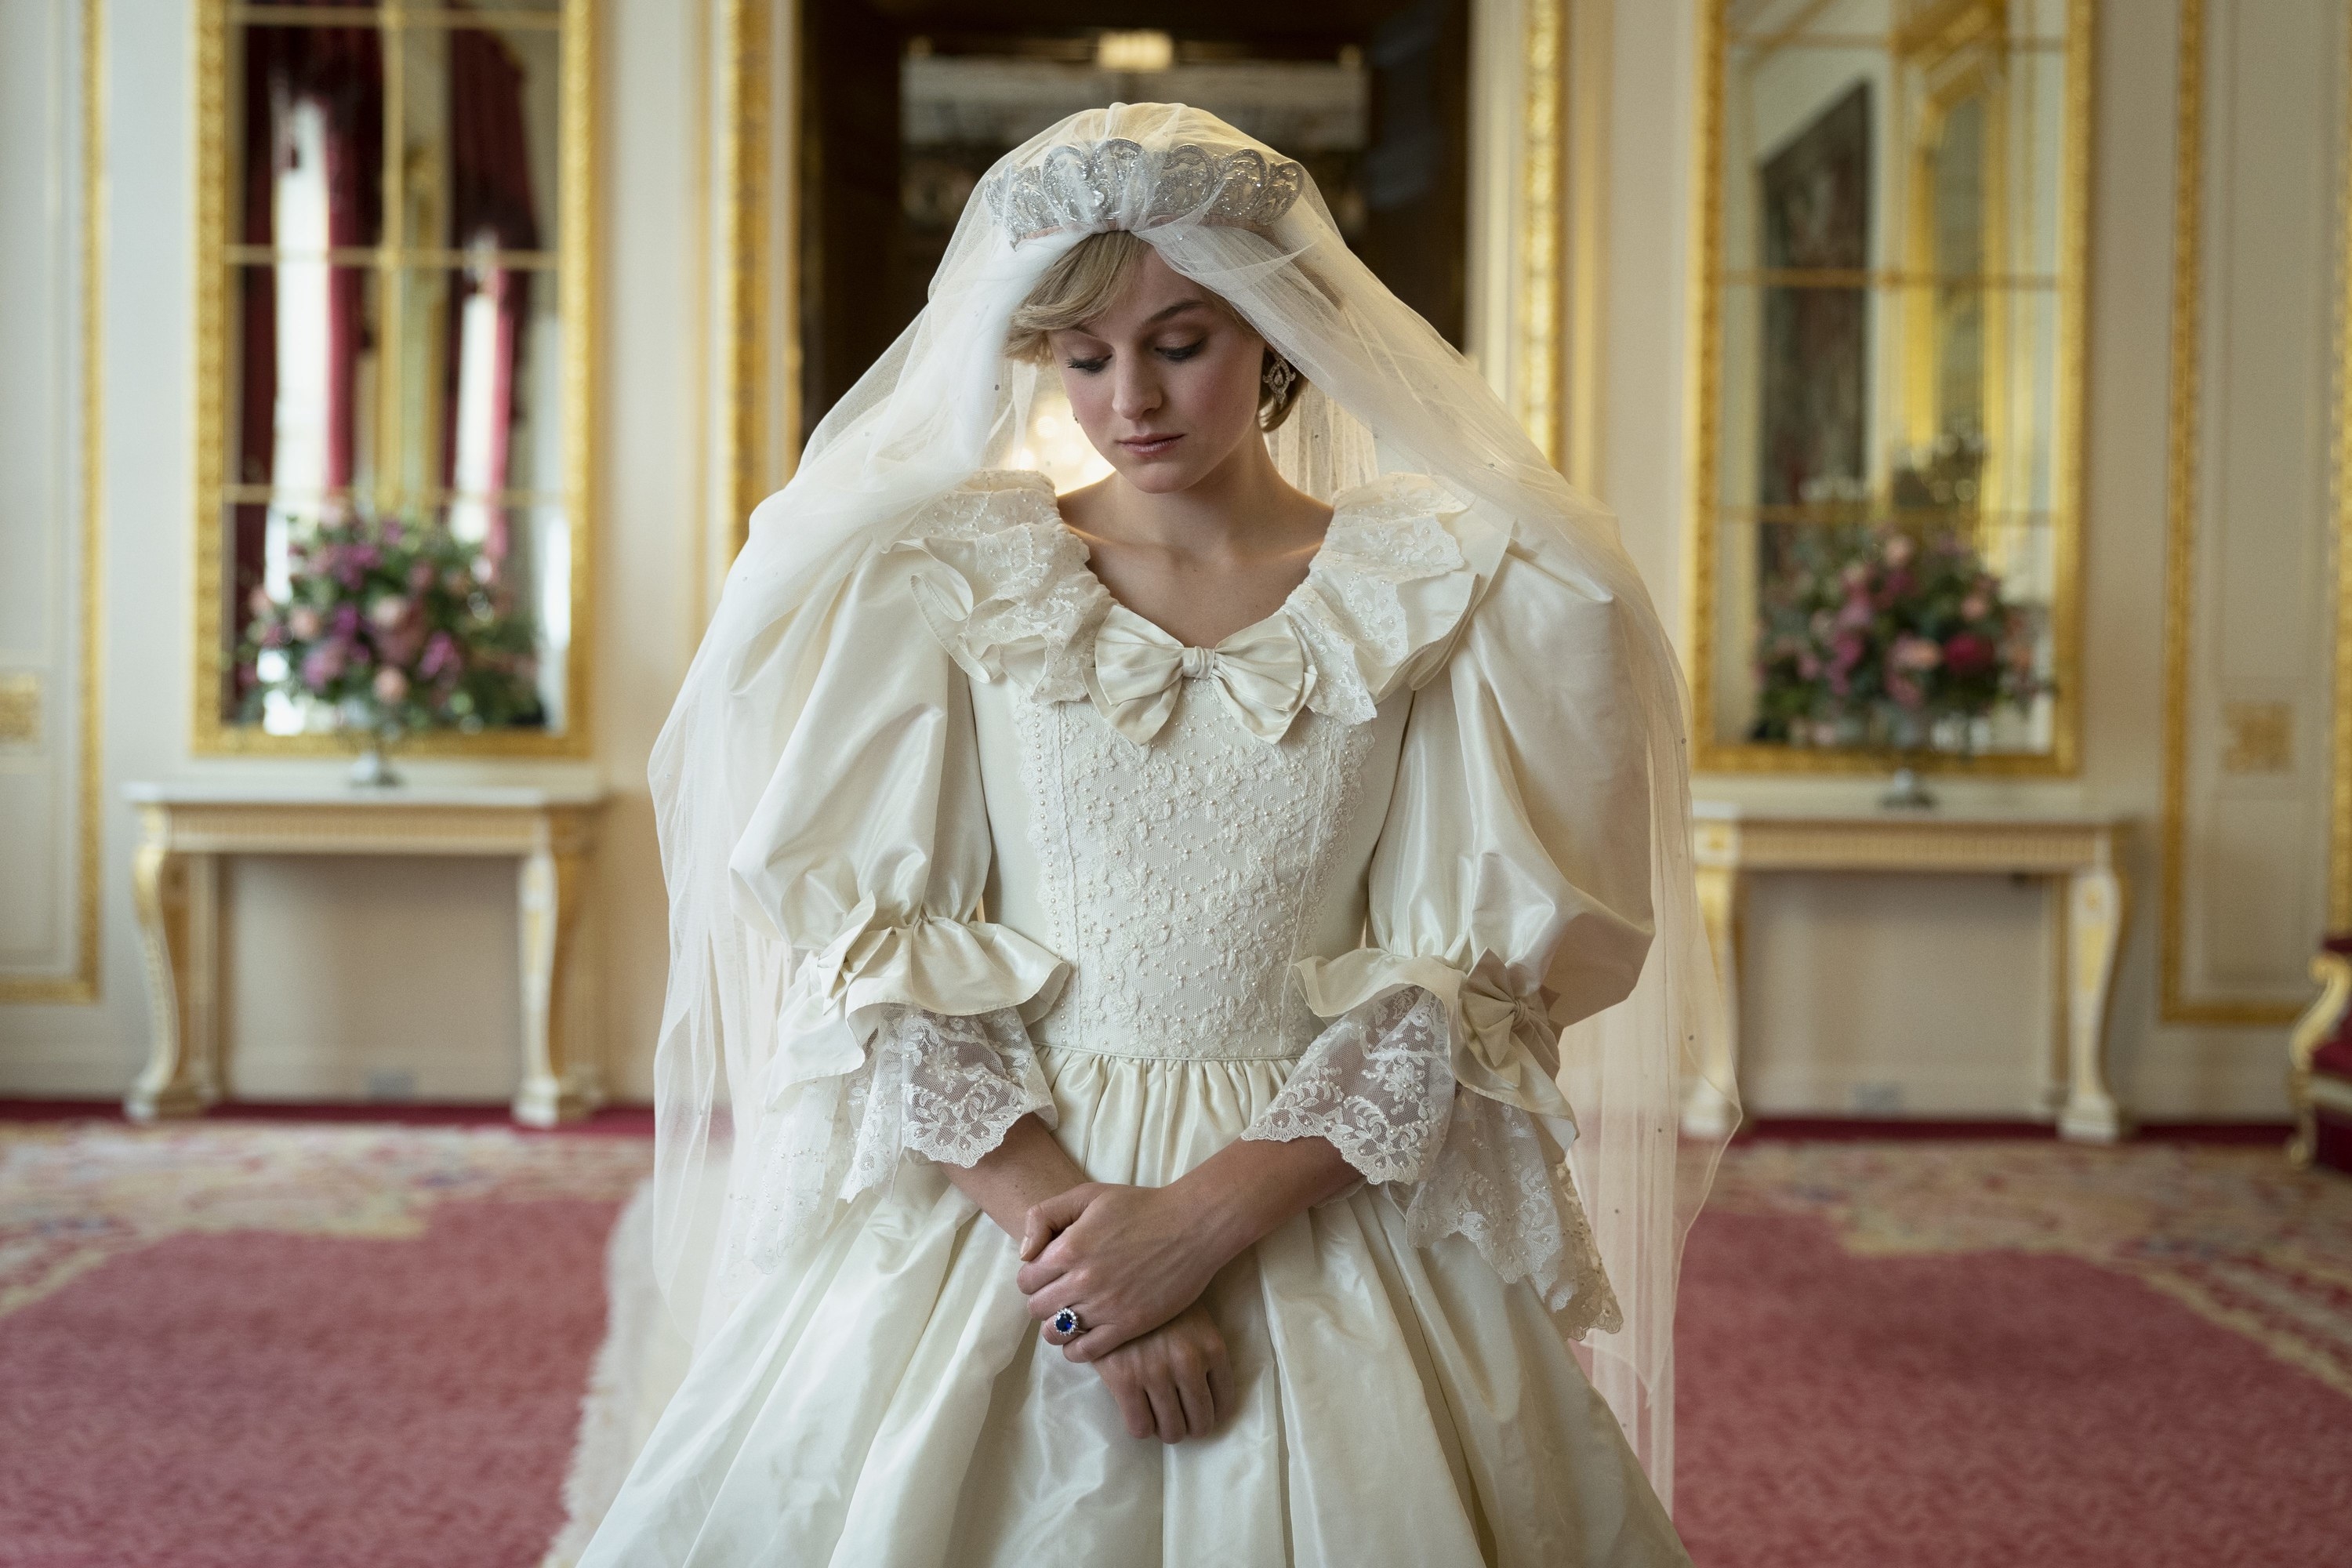 Emma Corrin as Princess Diana in her wedding dress